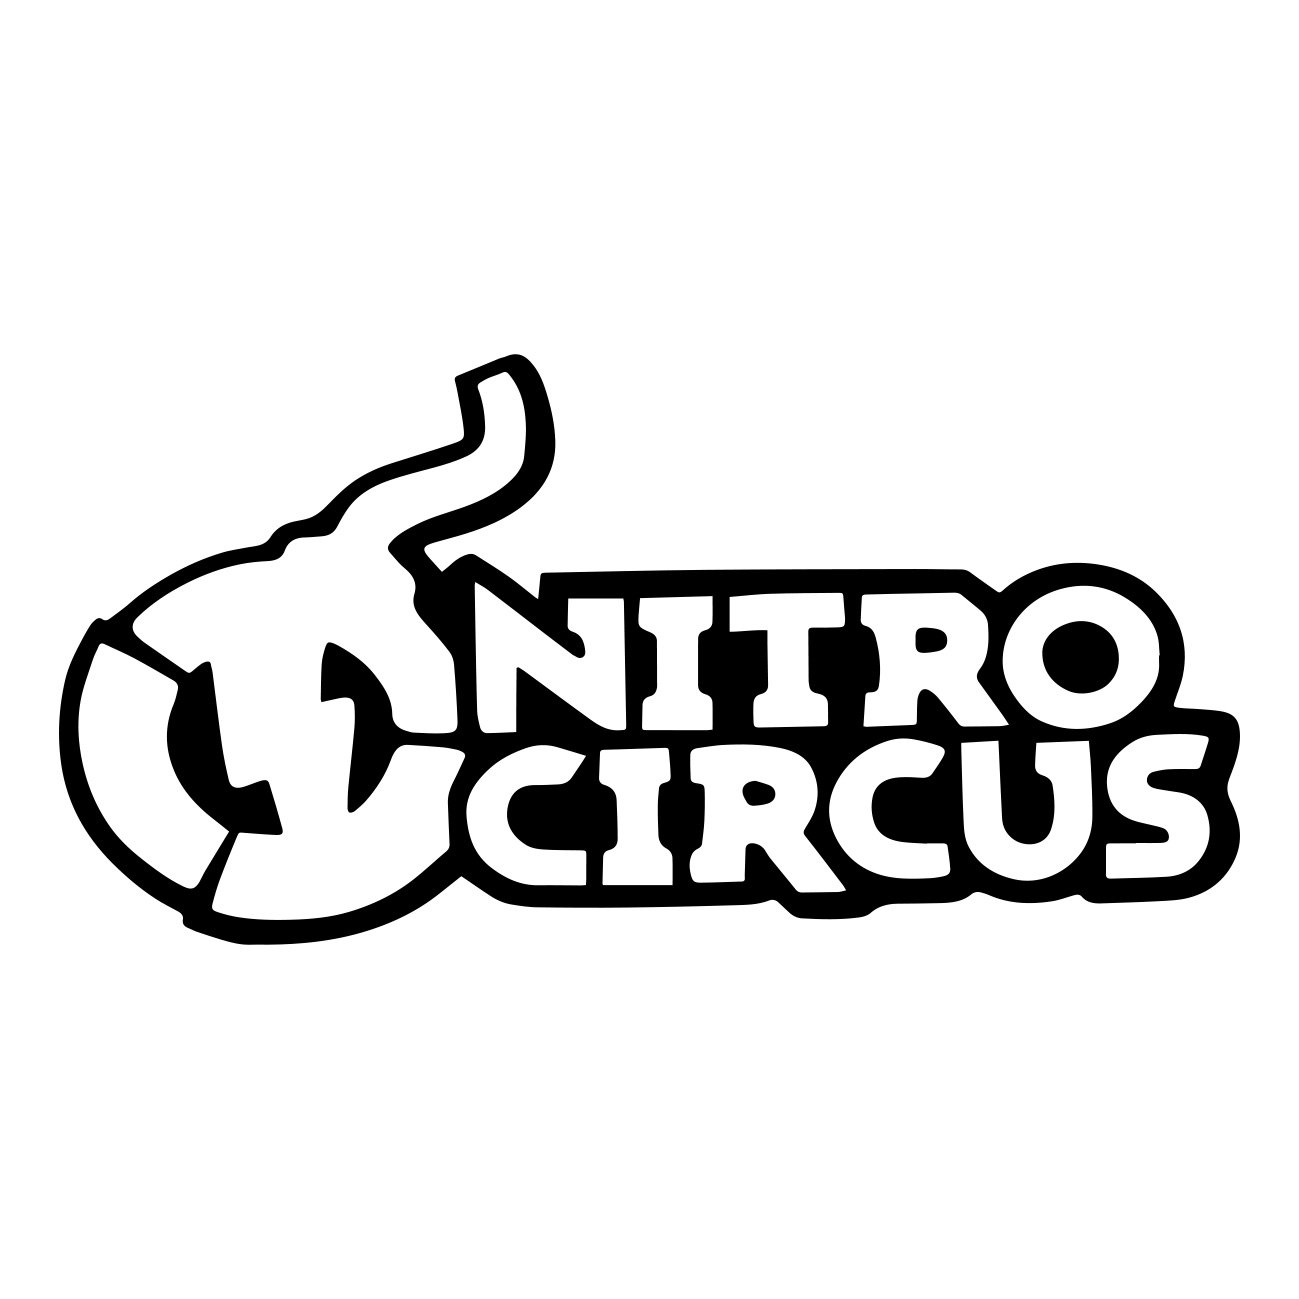 nitro circus